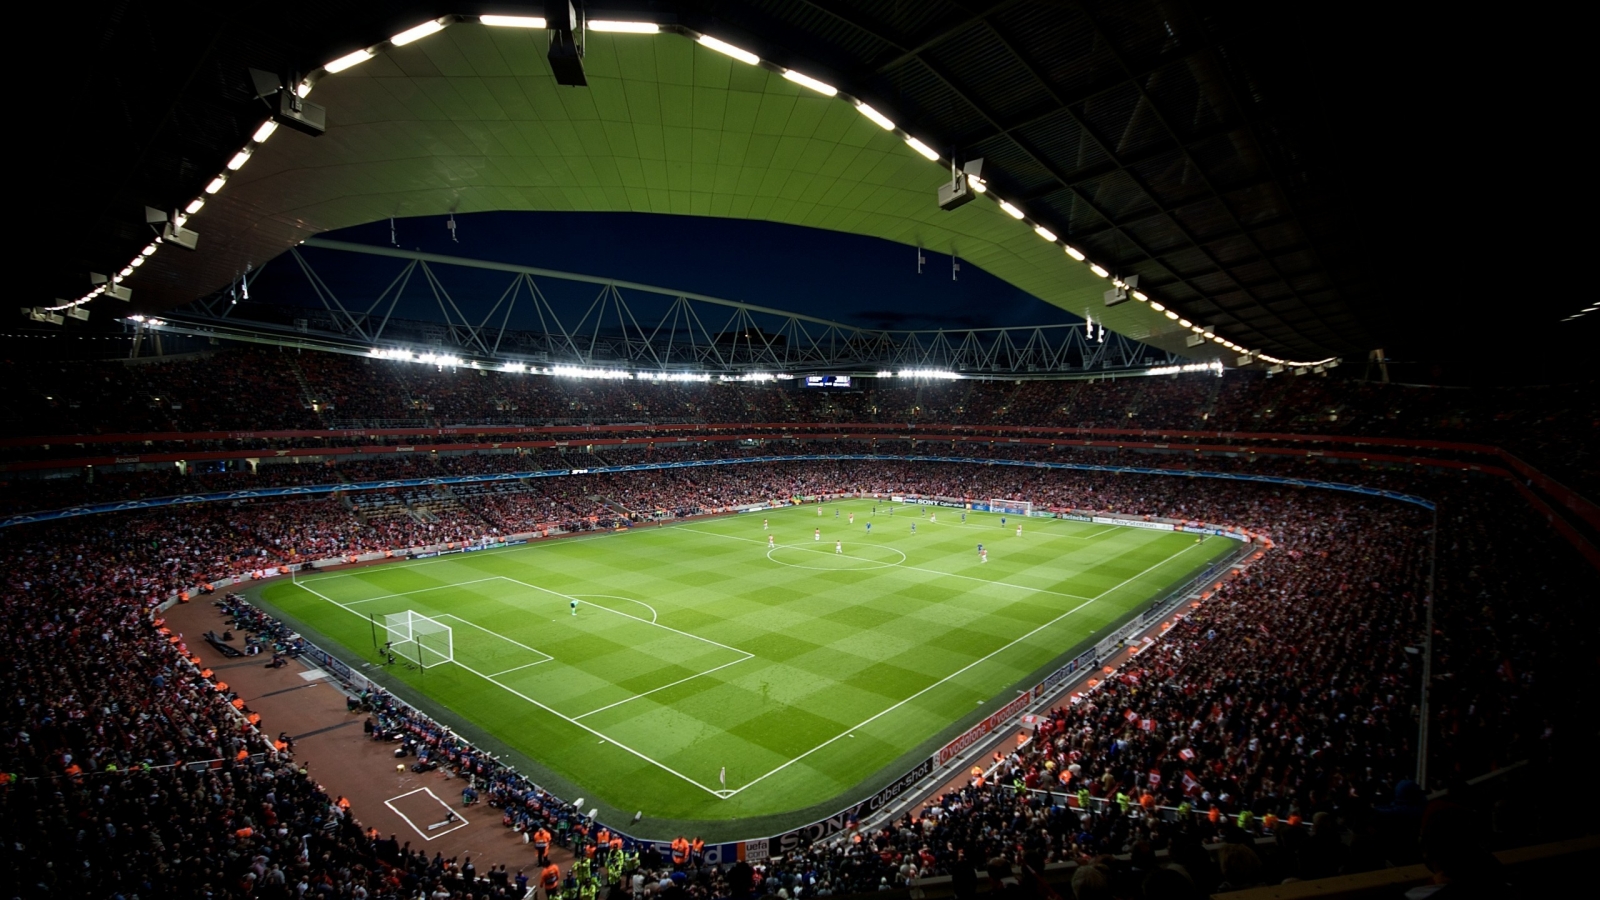 Stadium in Emirates for 1600 x 900 HDTV resolution